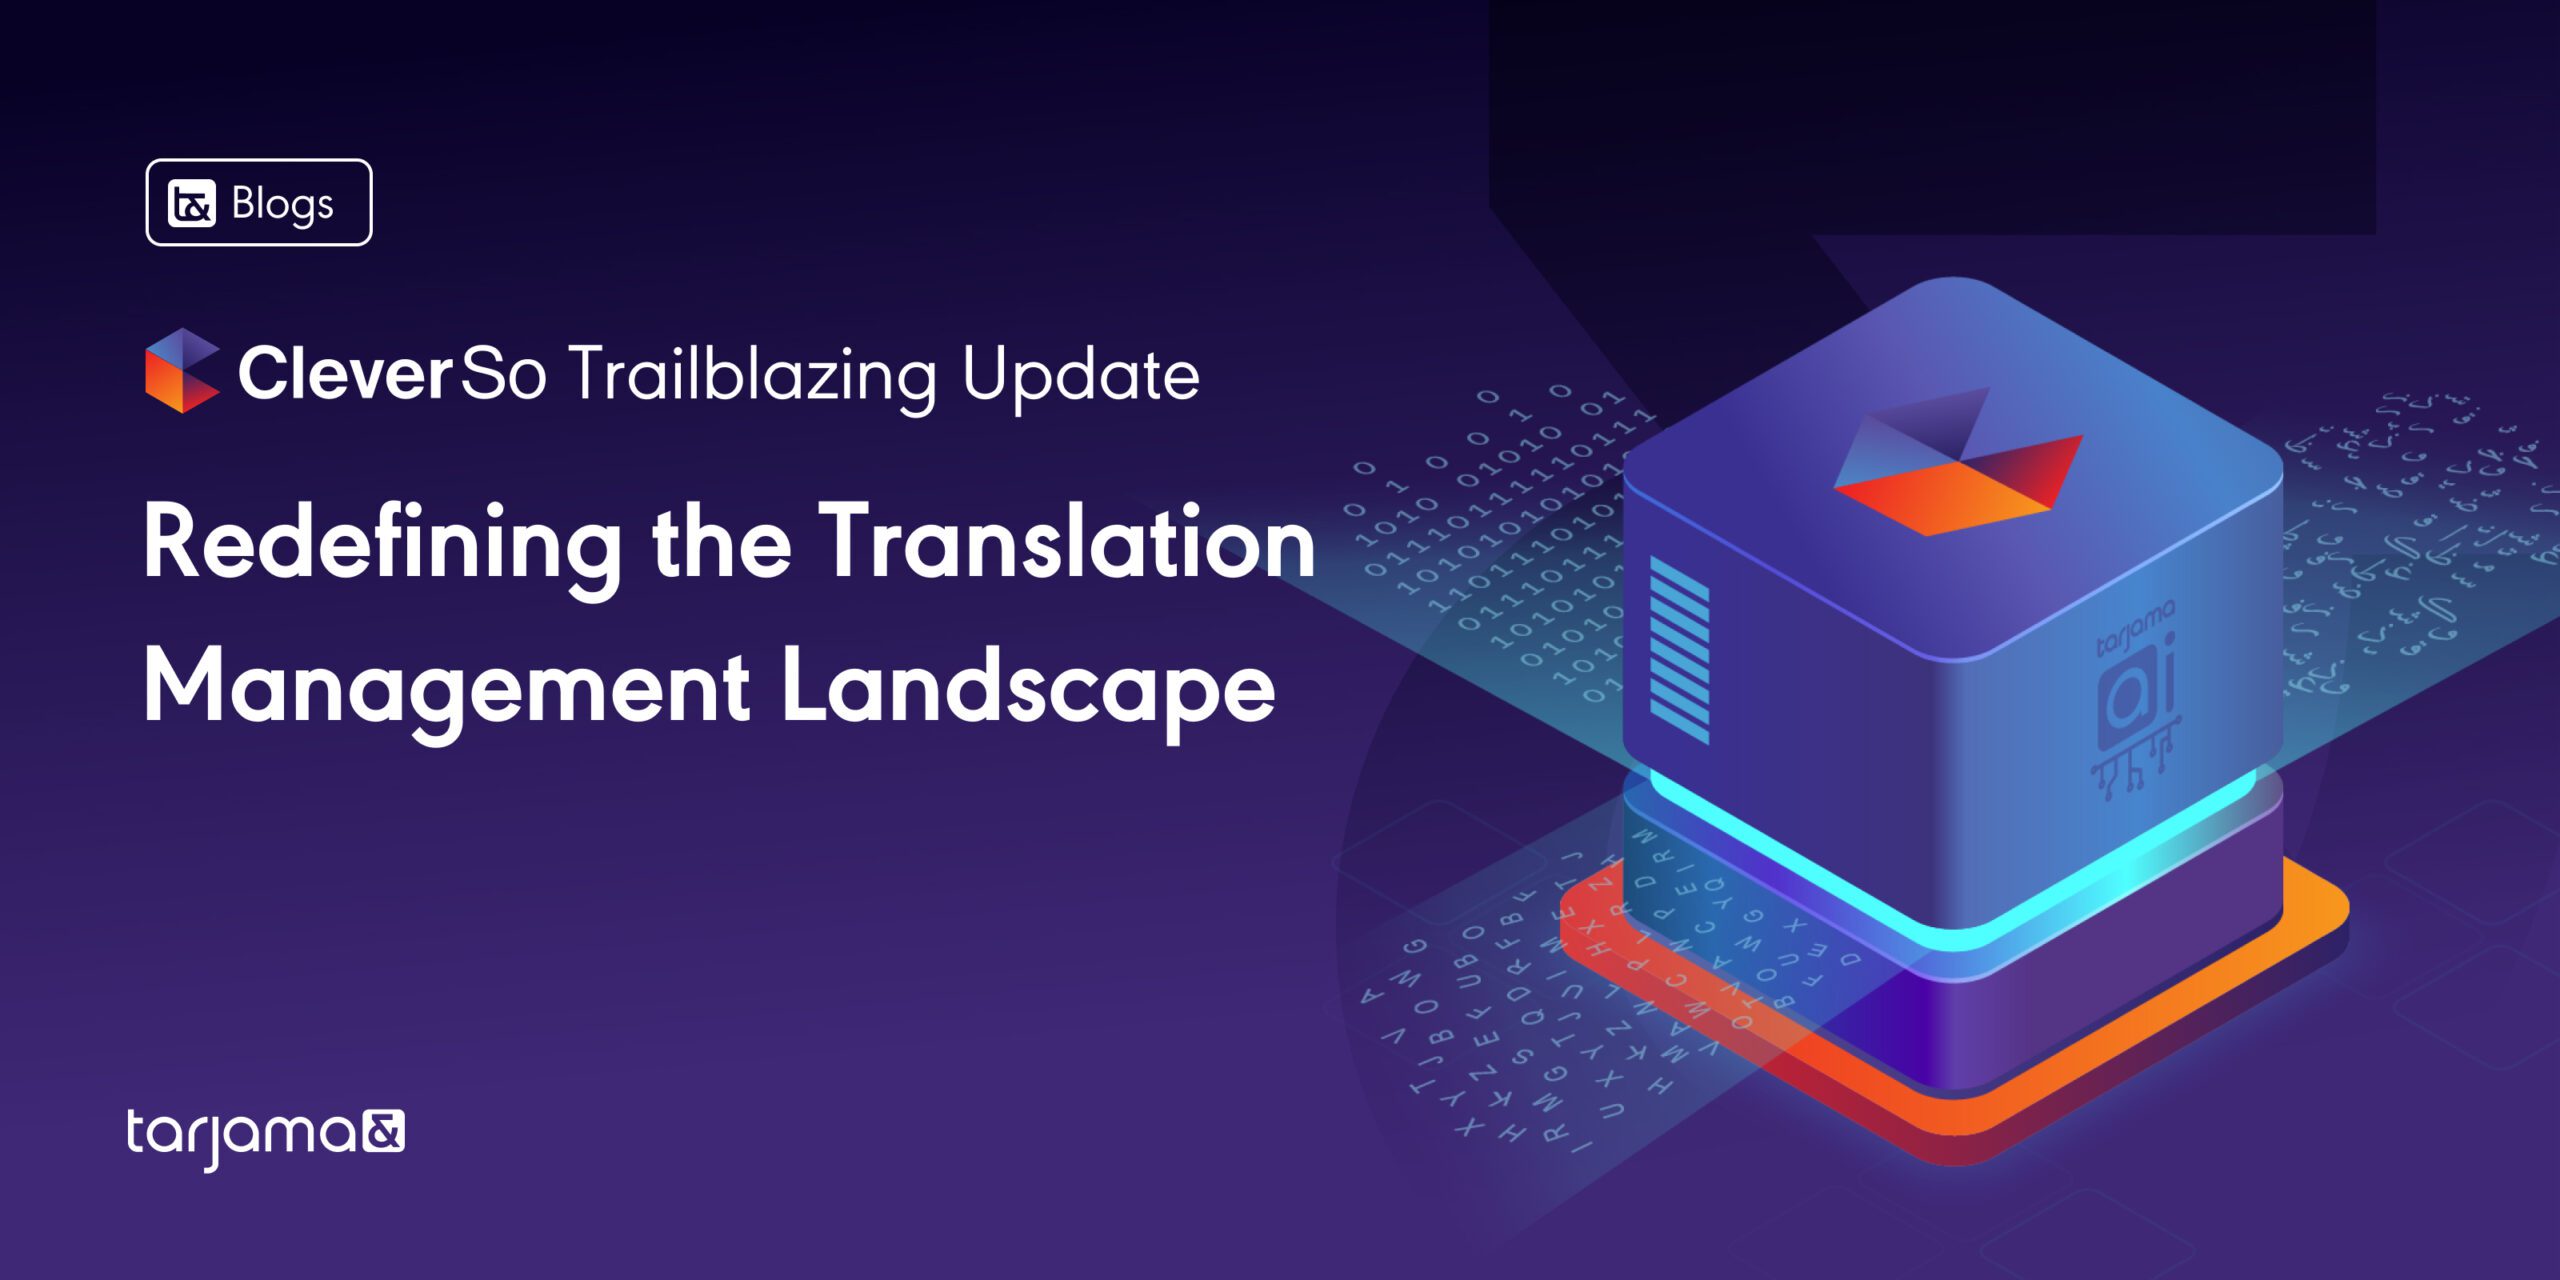 CleverSo's Trailblazing Update: Redefining the Translation Management Landscape